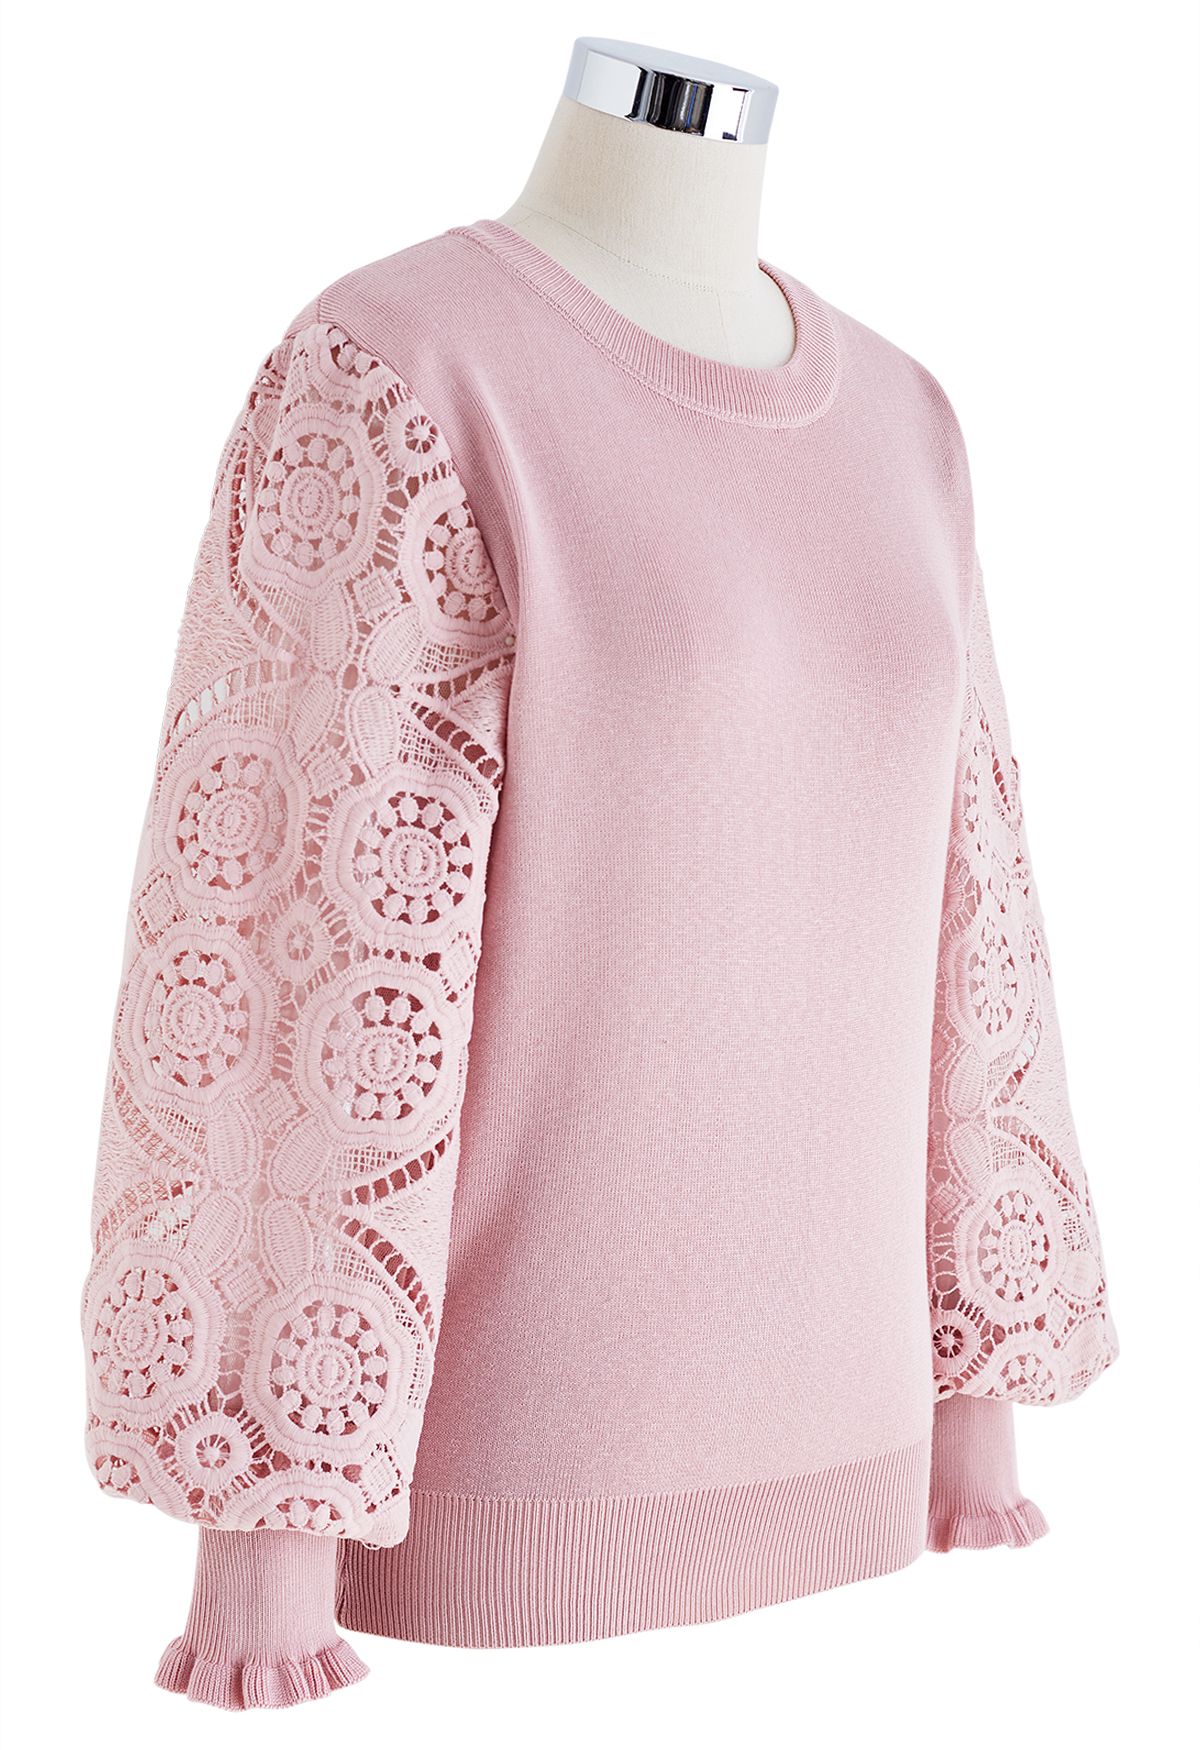 Top de punto con manga de crochet floral en rosa